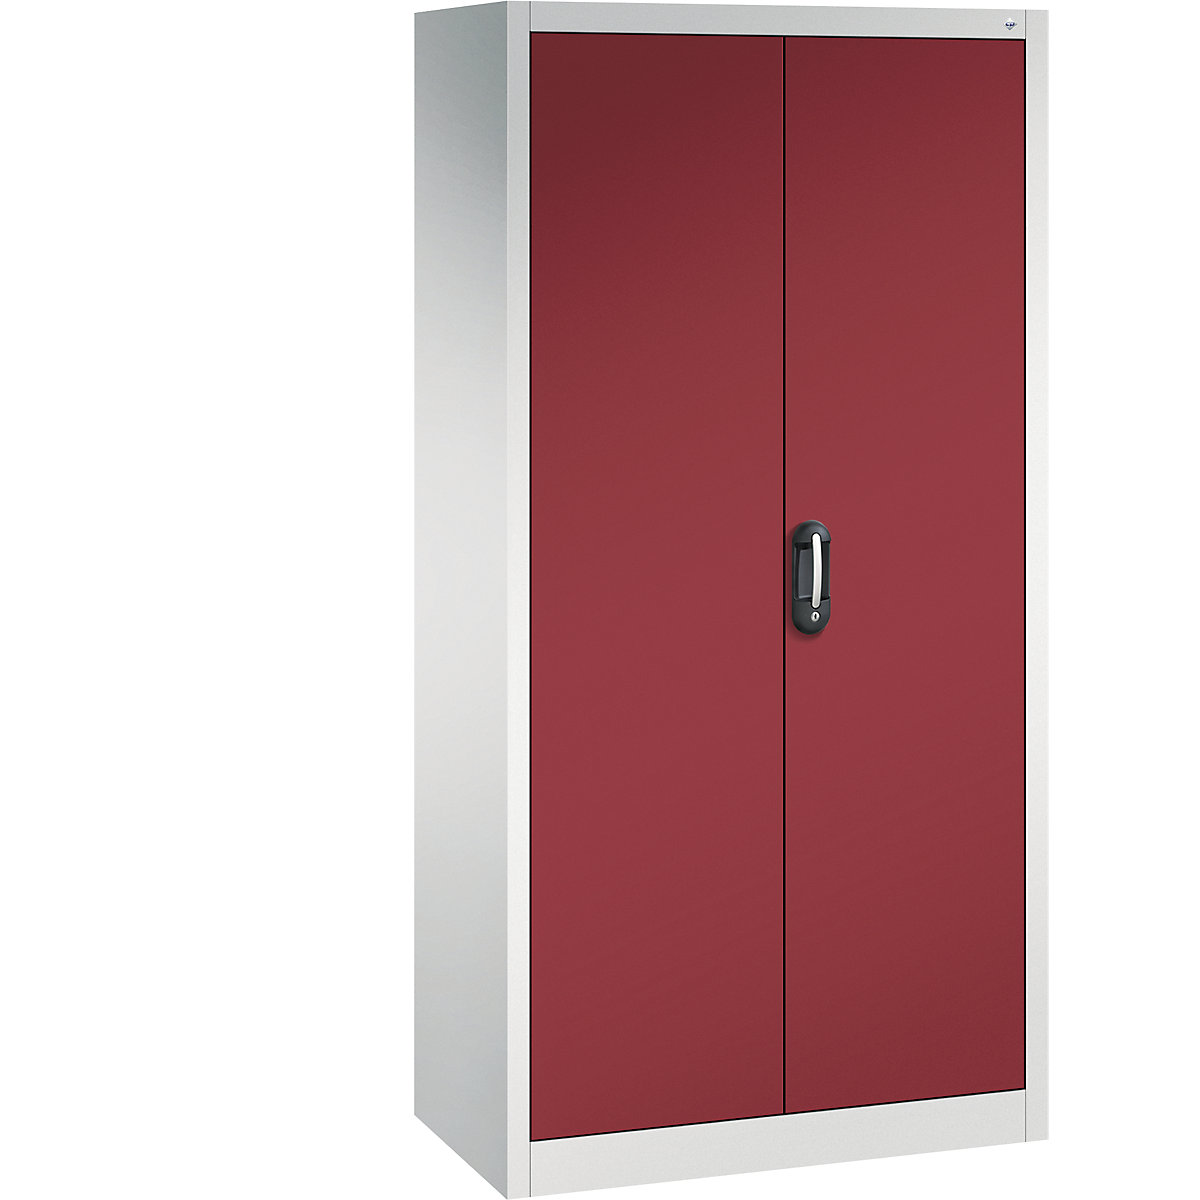 ACURADO universal cupboard – C+P, WxD 930 x 500 mm, light grey / ruby red-28